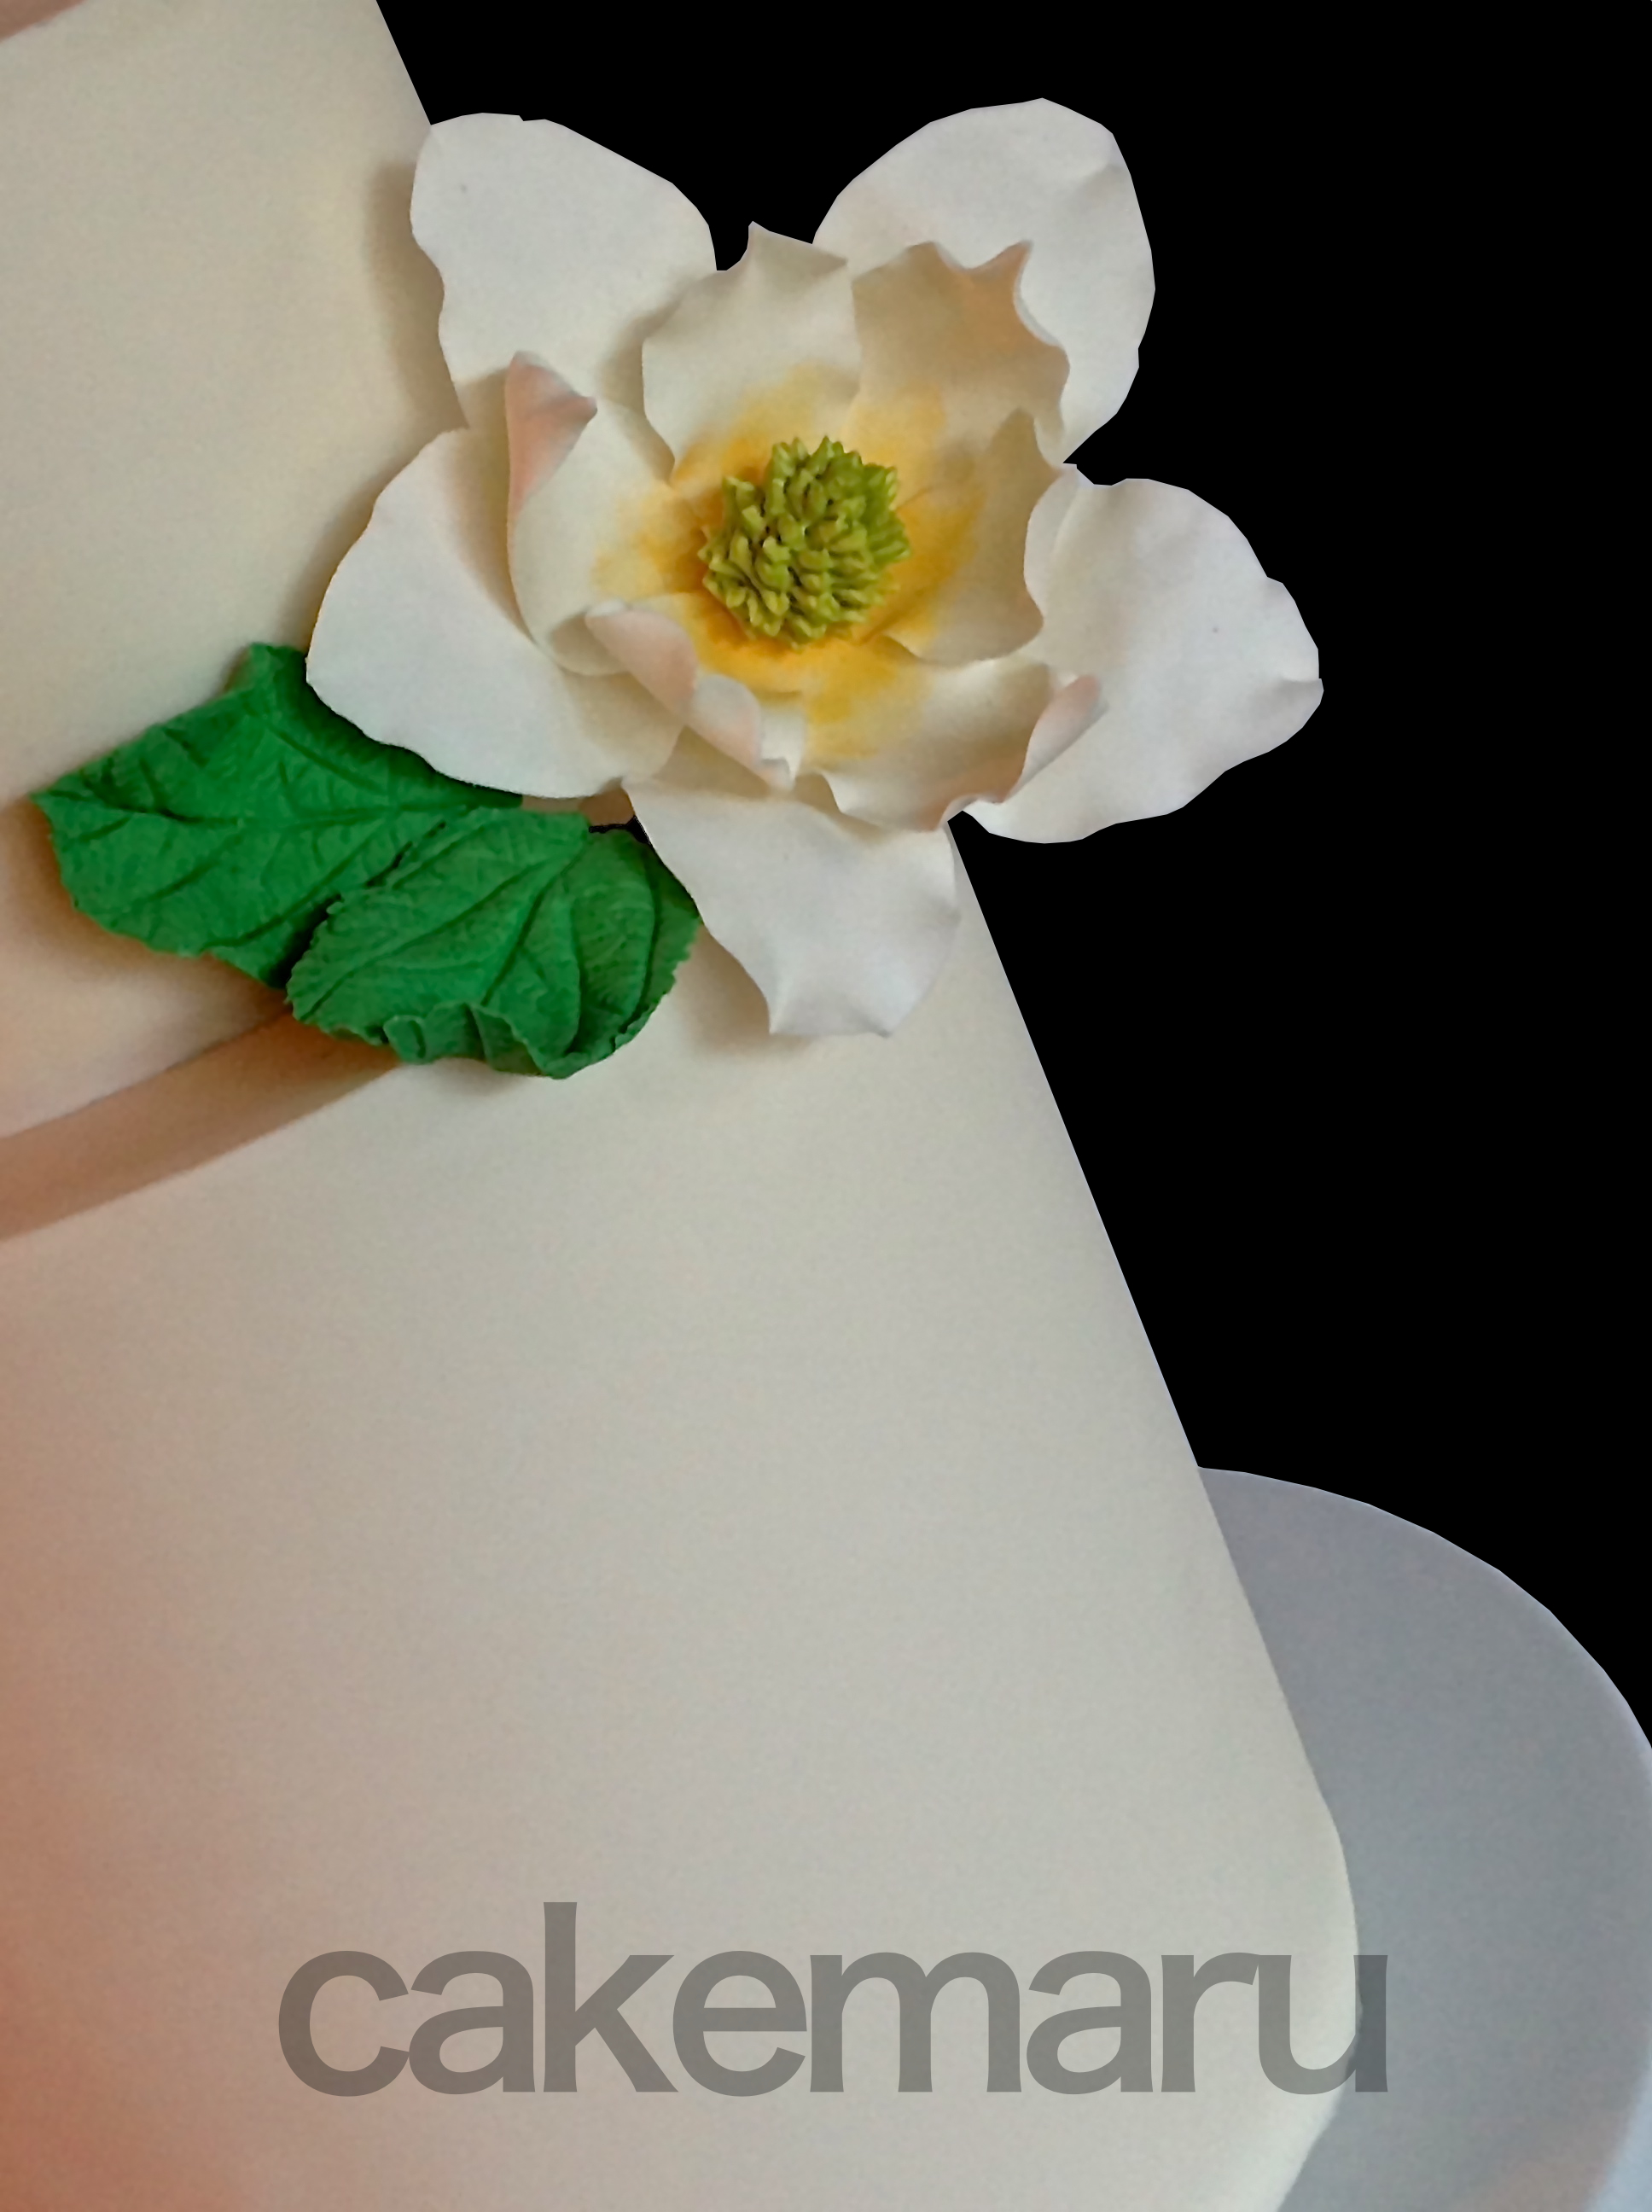 Magnolia cake with name.jpg